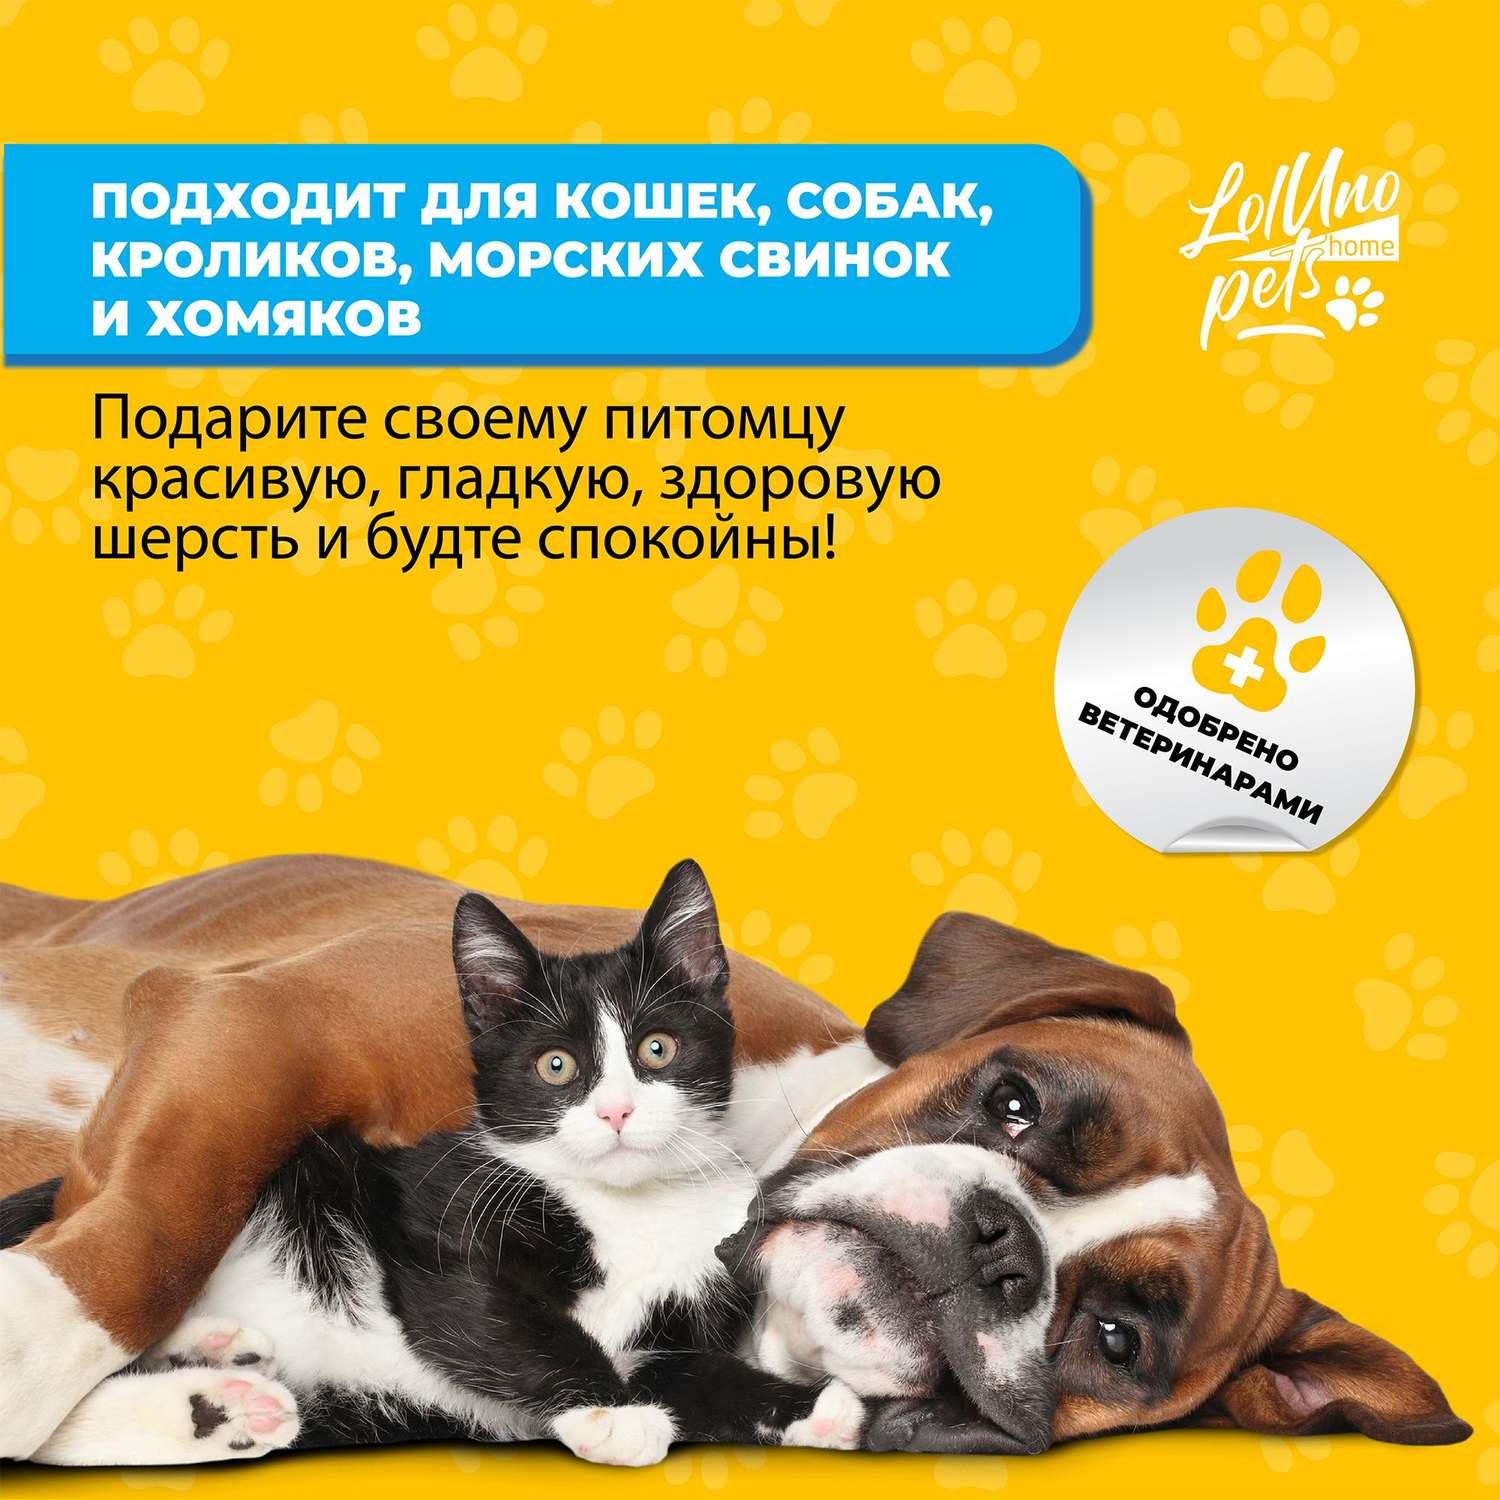 Колтунорез LolUno home Pets для собак и кошек - фото 8